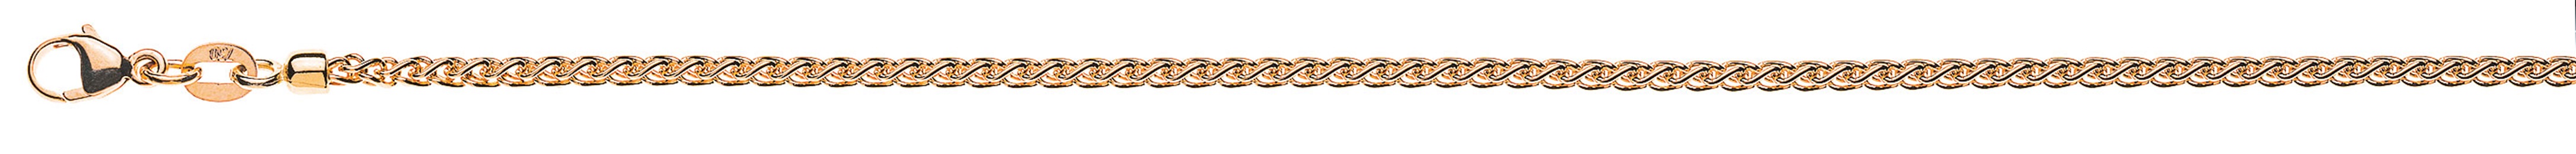 AURONOS Prestige Halskette Roségold 18K Zopfkette 45cm 2.15mm